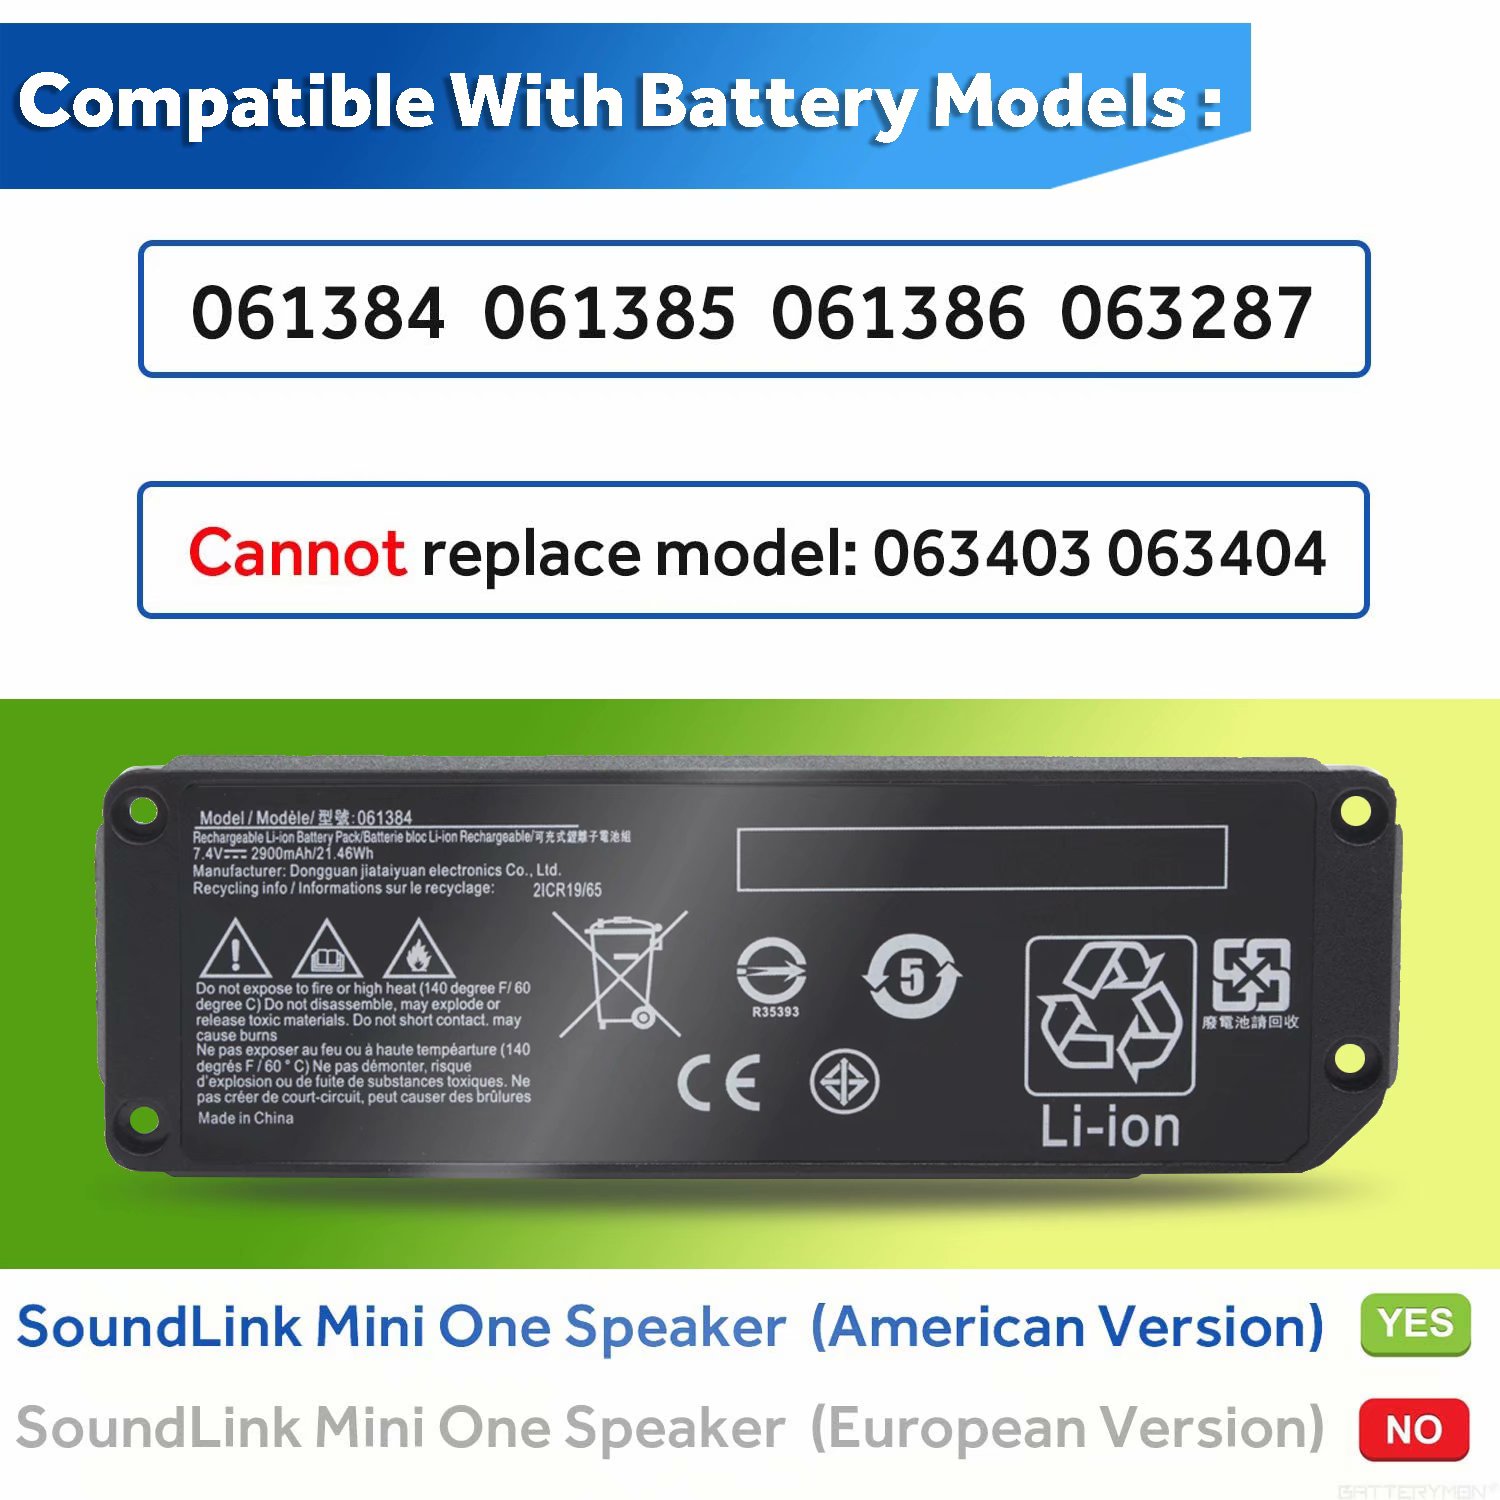 Zmoon 061384 061385 061386 063287 Battery for Boses SoundLink SoundLink Bluetooth Speaker Mini One (7.4V 21.46Wh 2900mAh) - image 4 of 9